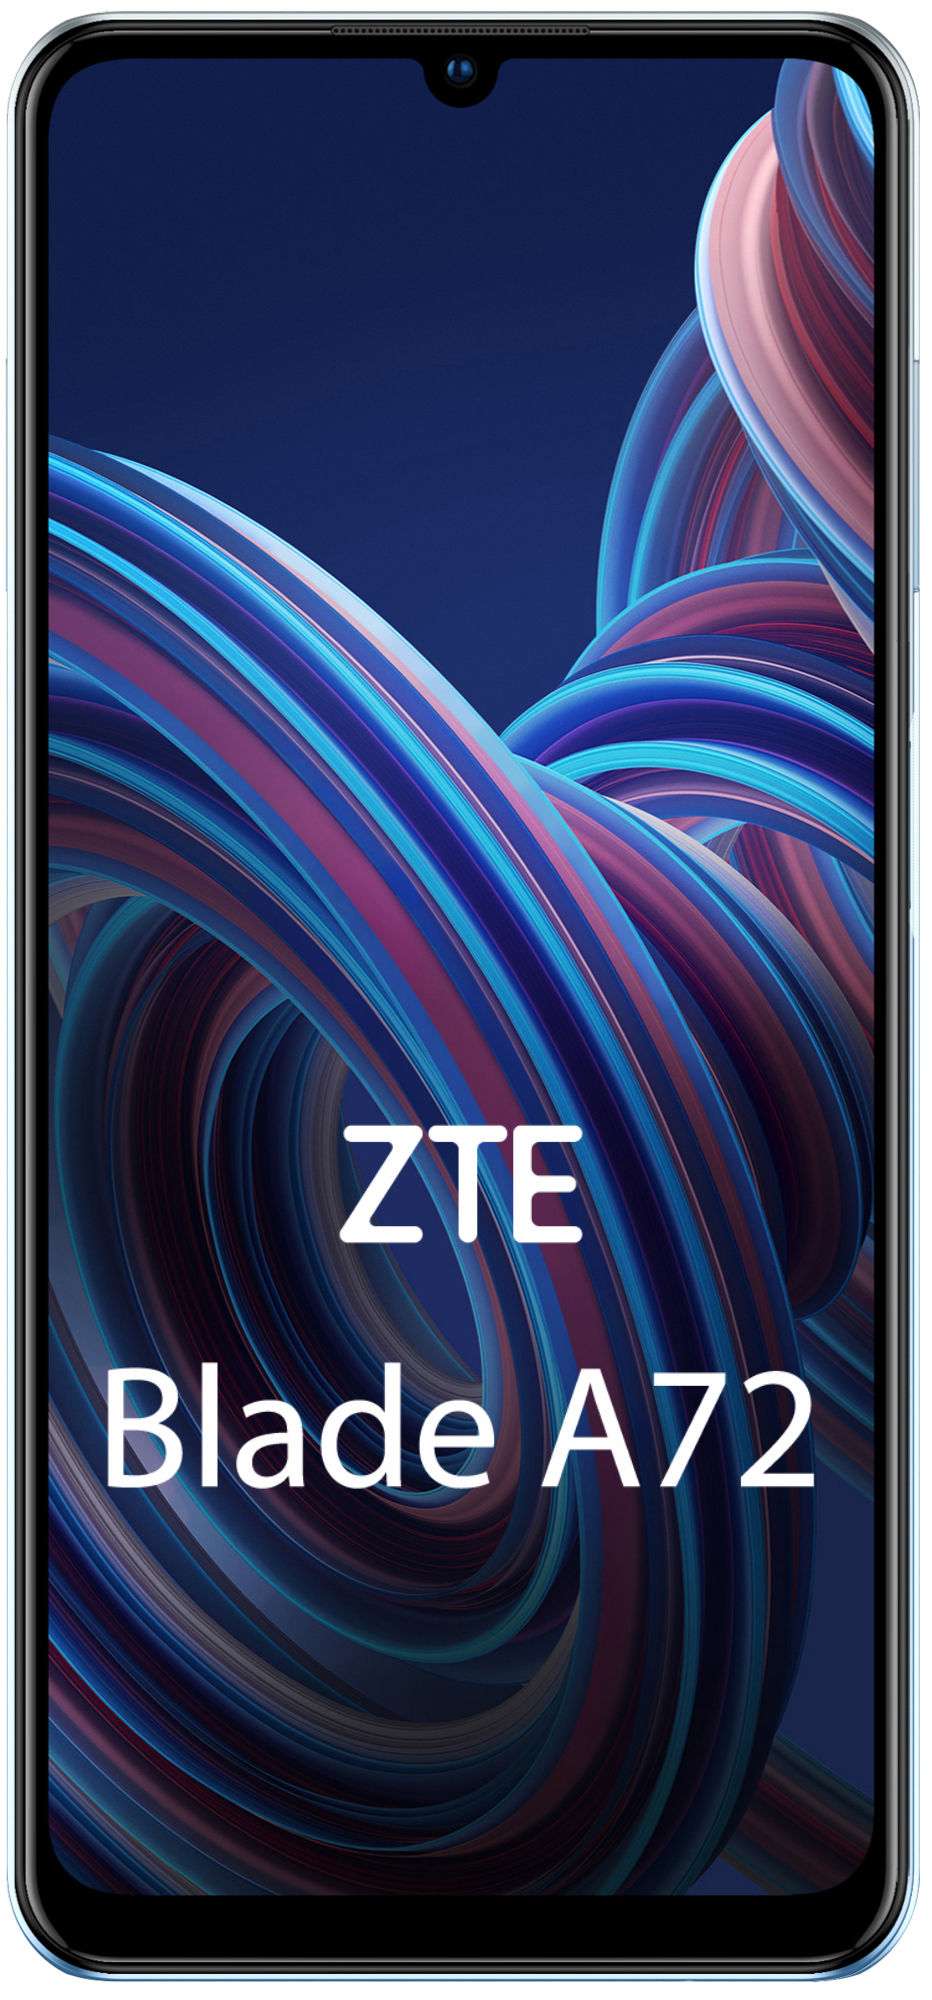 64 Blade ZTE SIM GB A72 Blau Dual